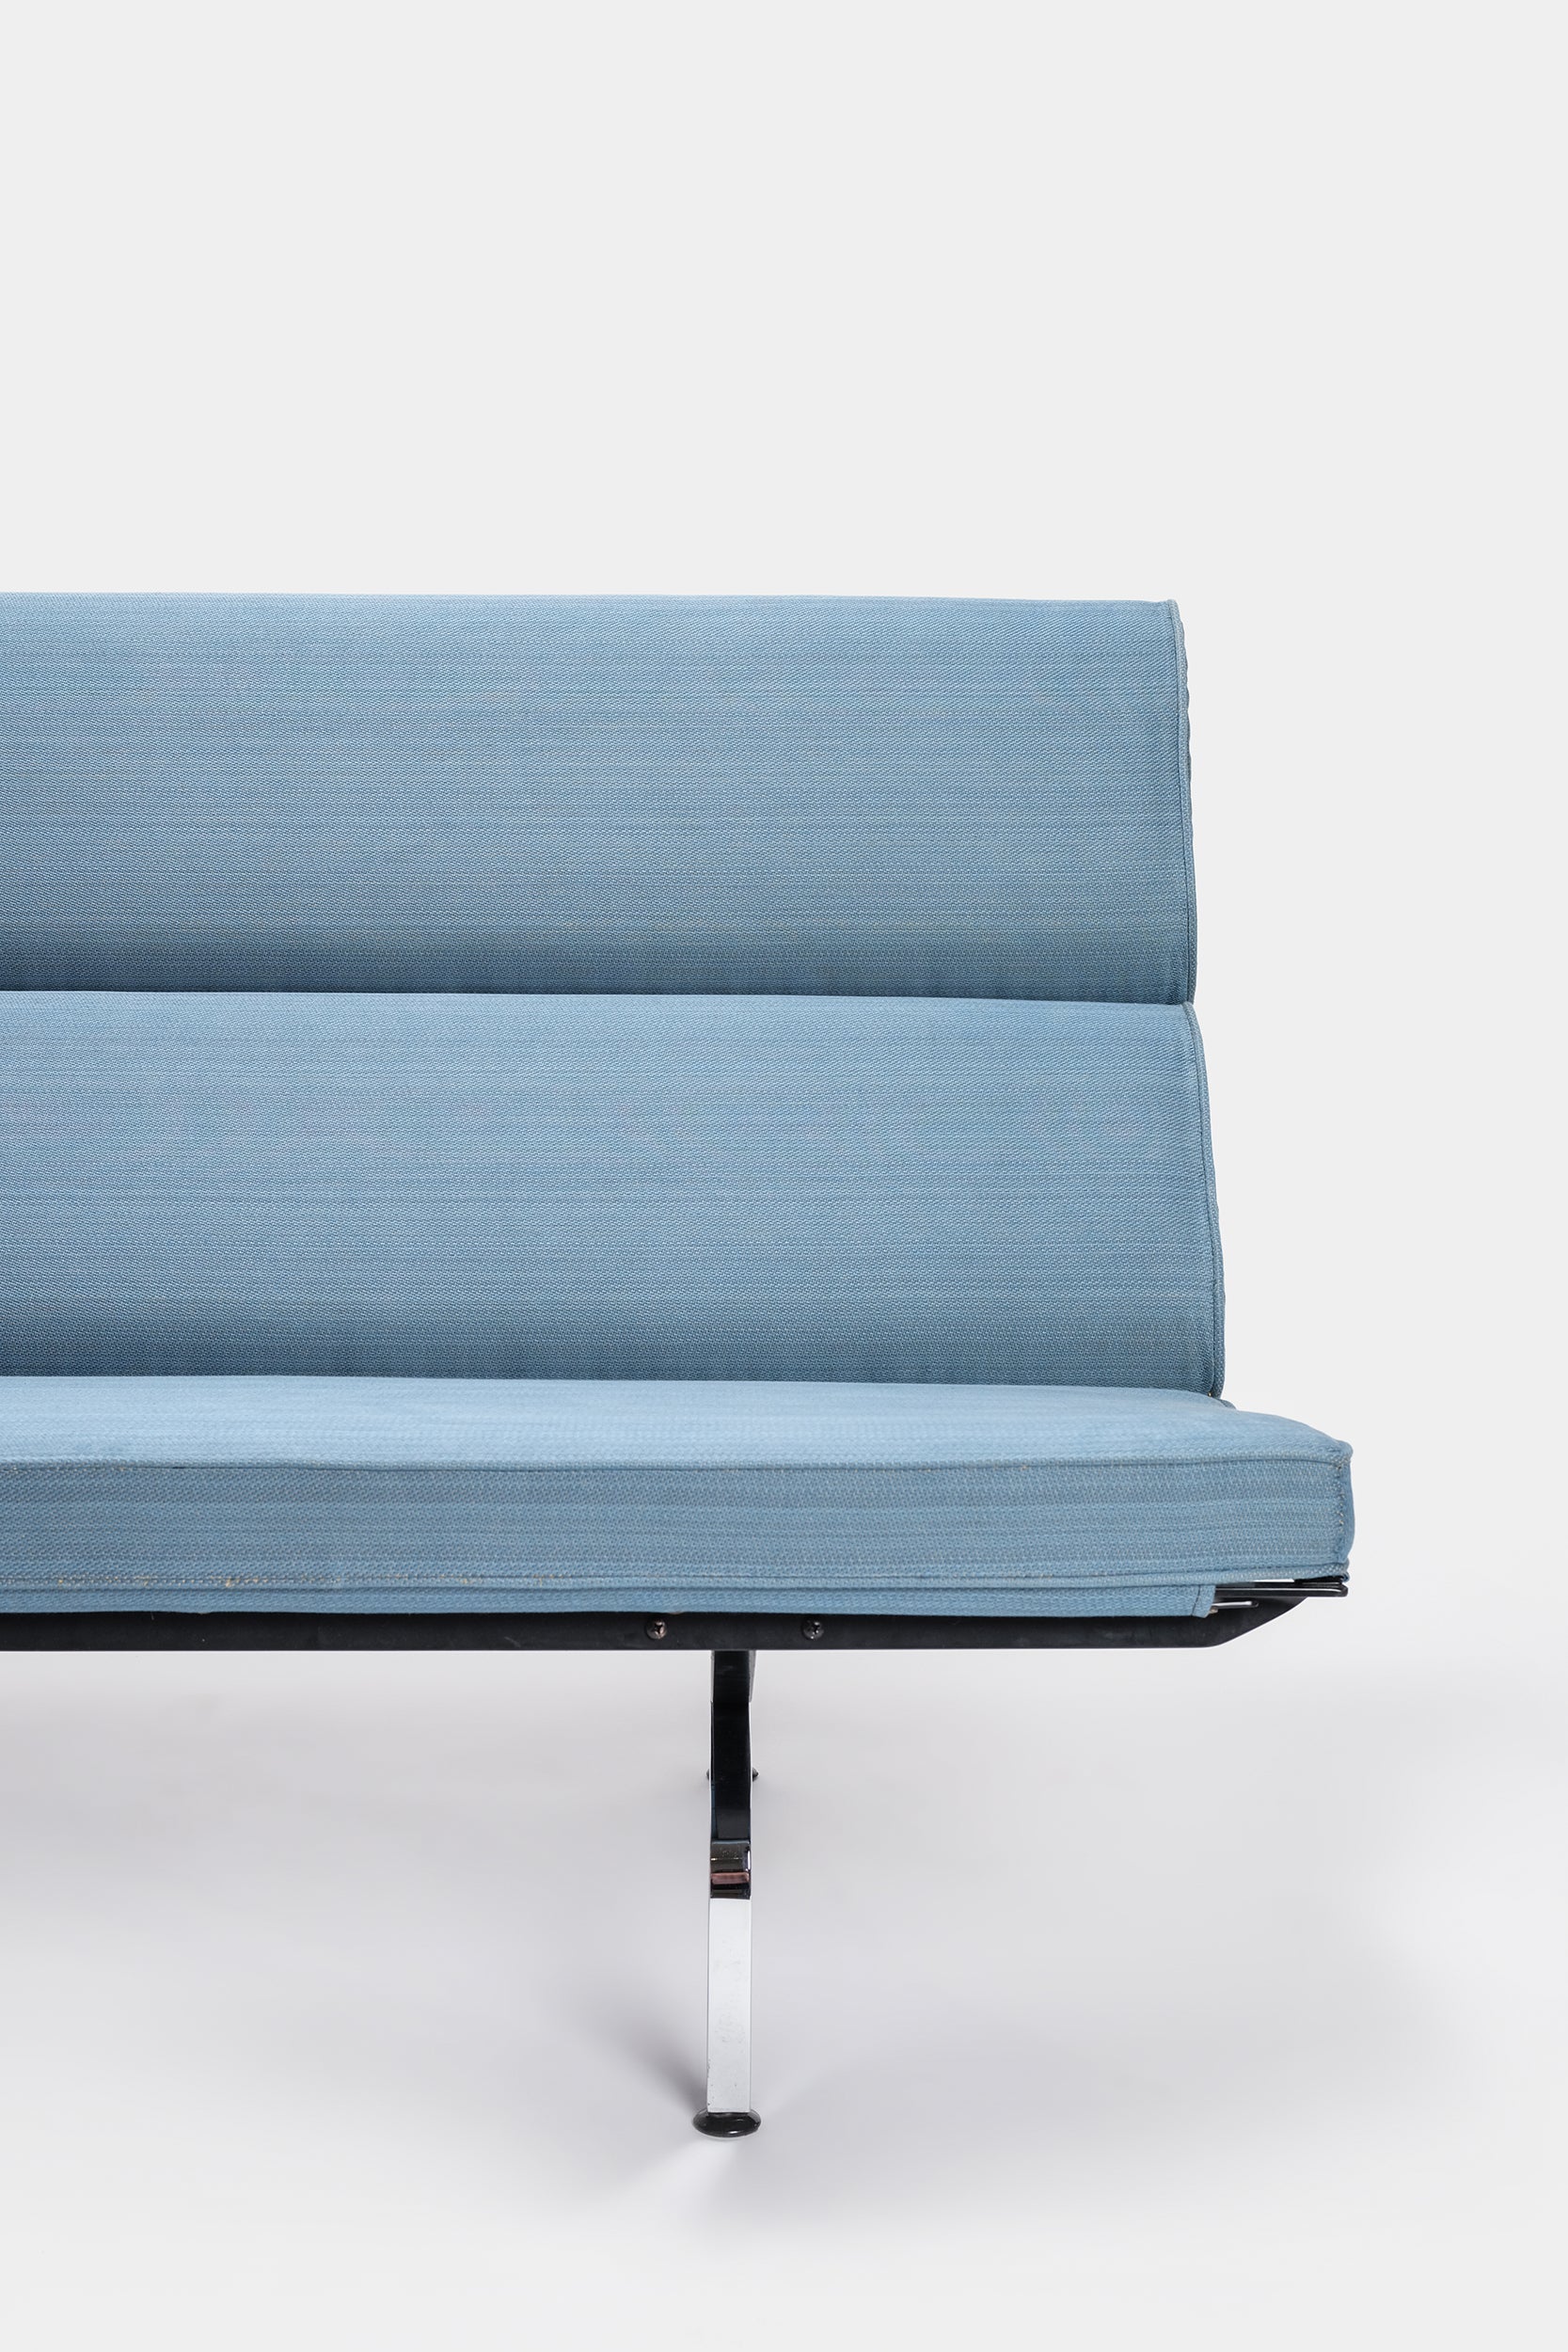 Charles & Ray Eames, "Compact" sofa, 50s